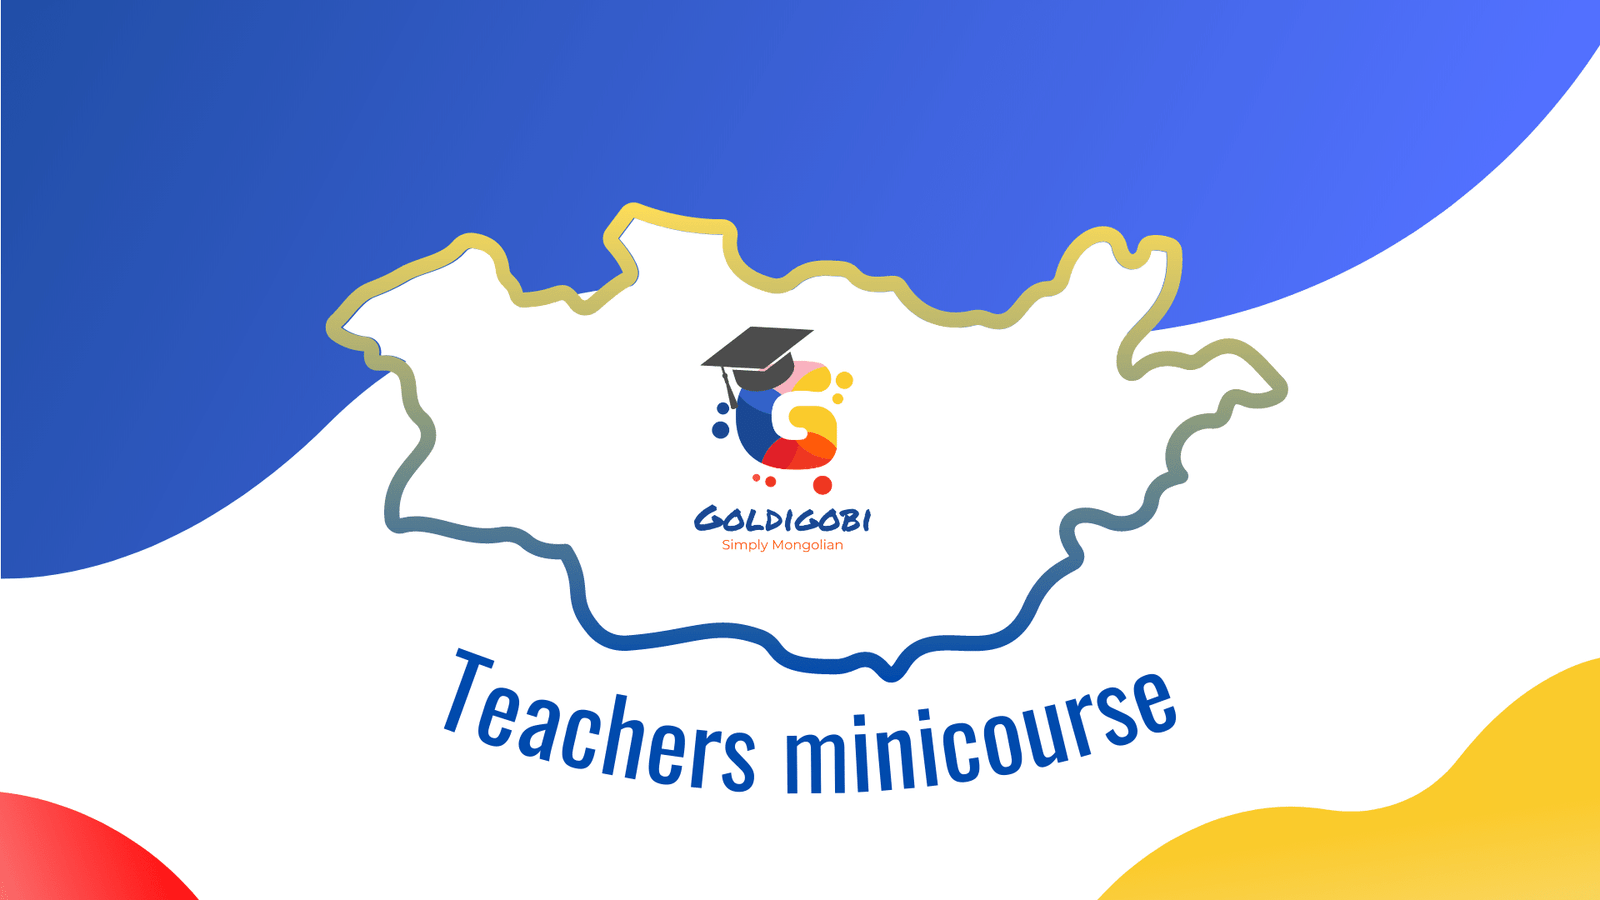 Mongolian Teachers minicourse